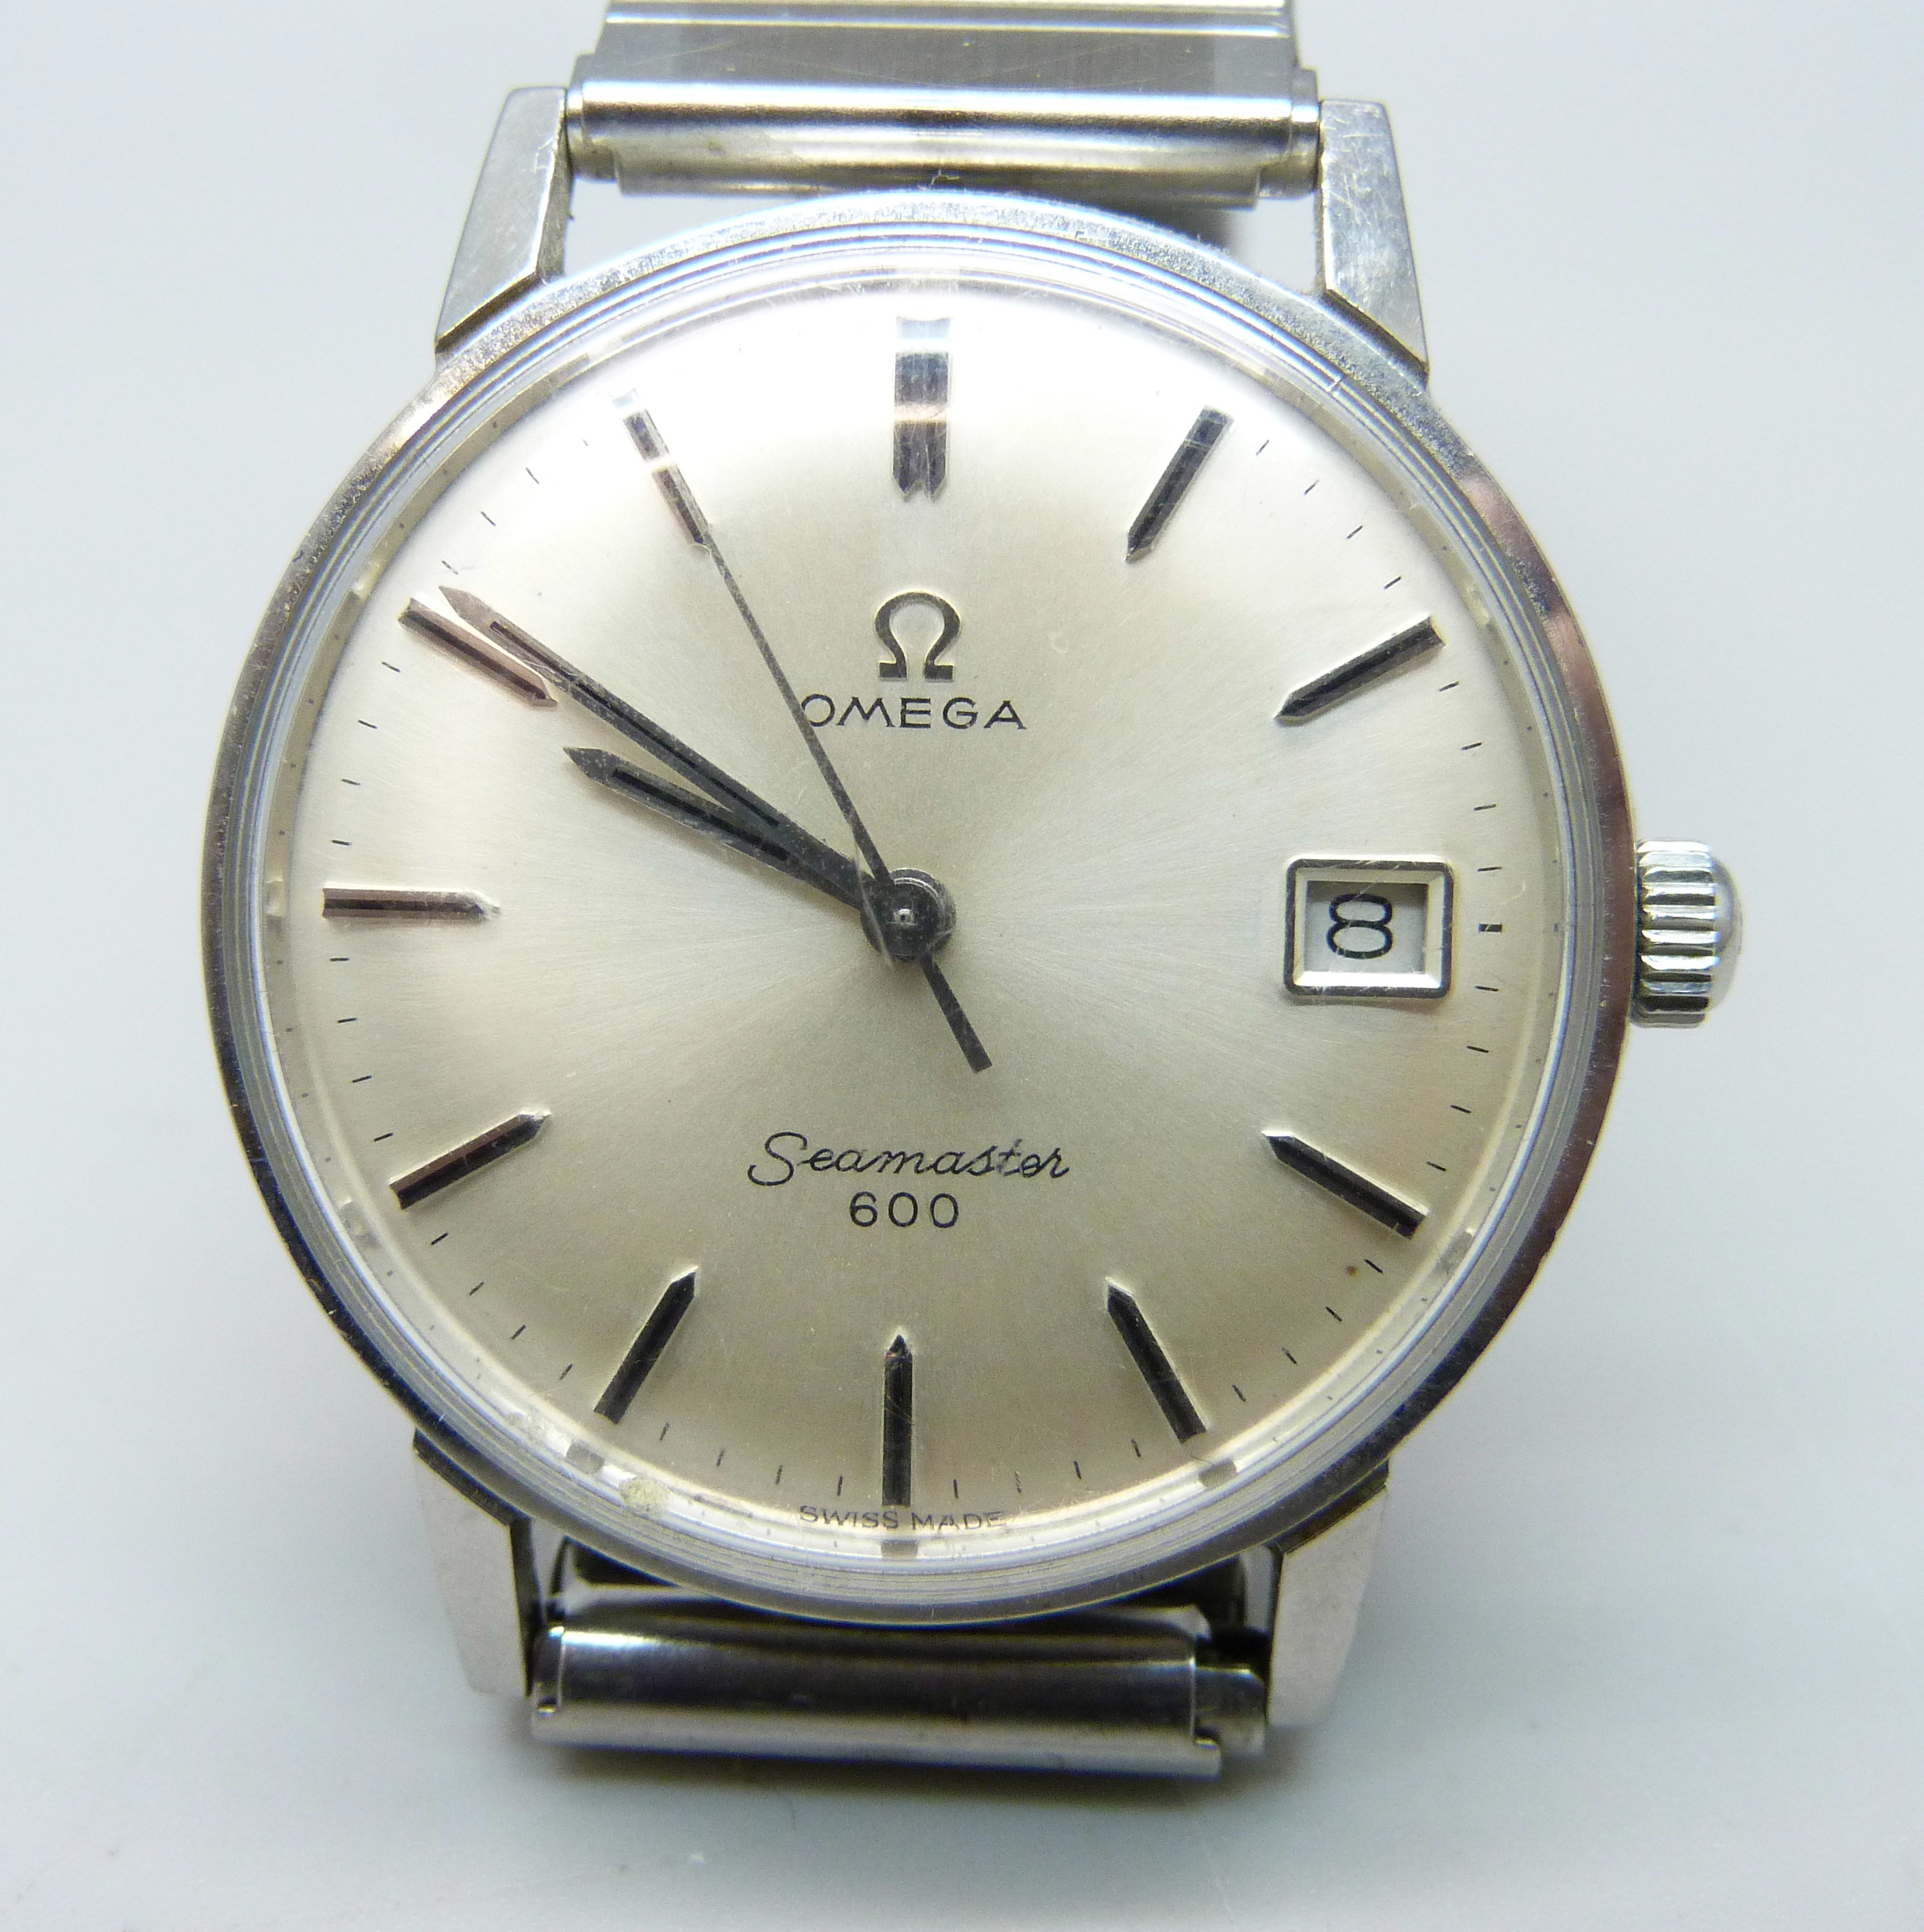 An Omega Seamaster 600 wristwatch - Image 2 of 5